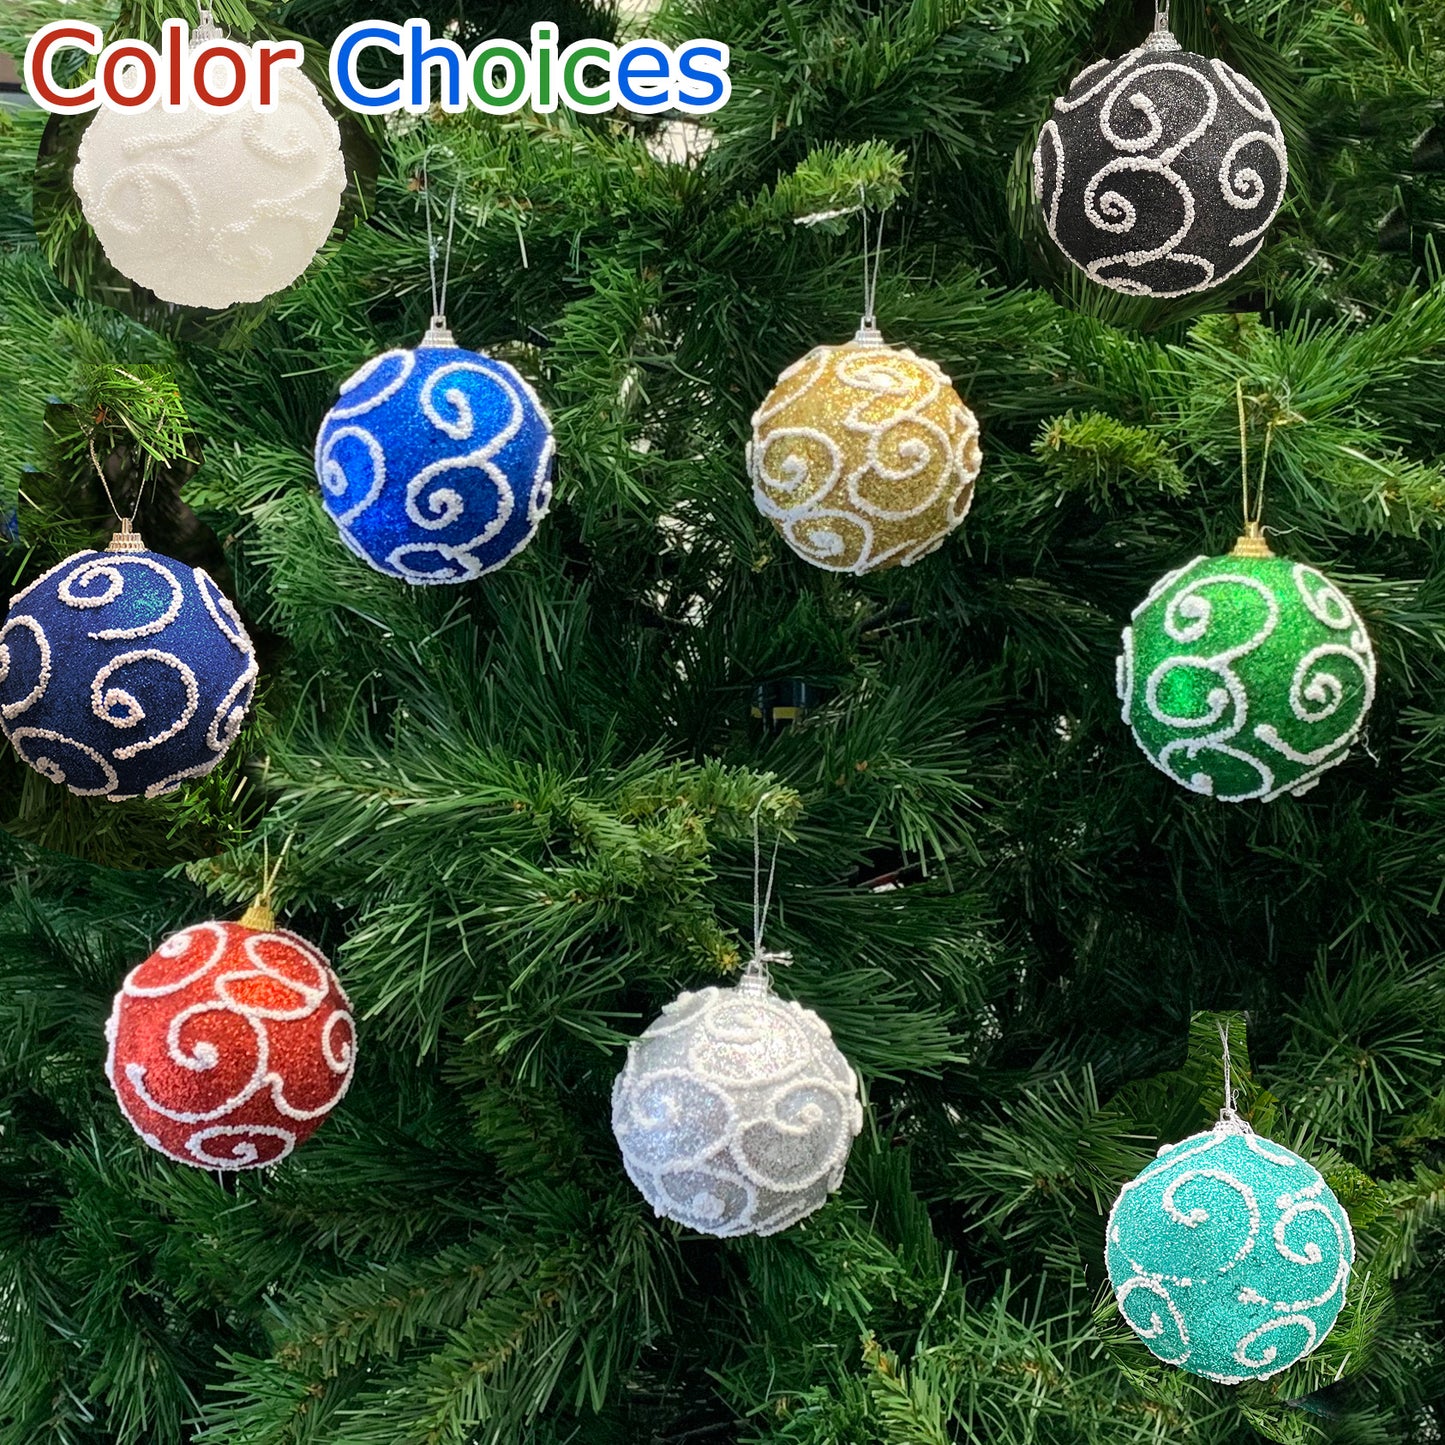 Allgala Christmas Ornament Balls 12 Pack 3 Inch - Glitter Decorated Foam